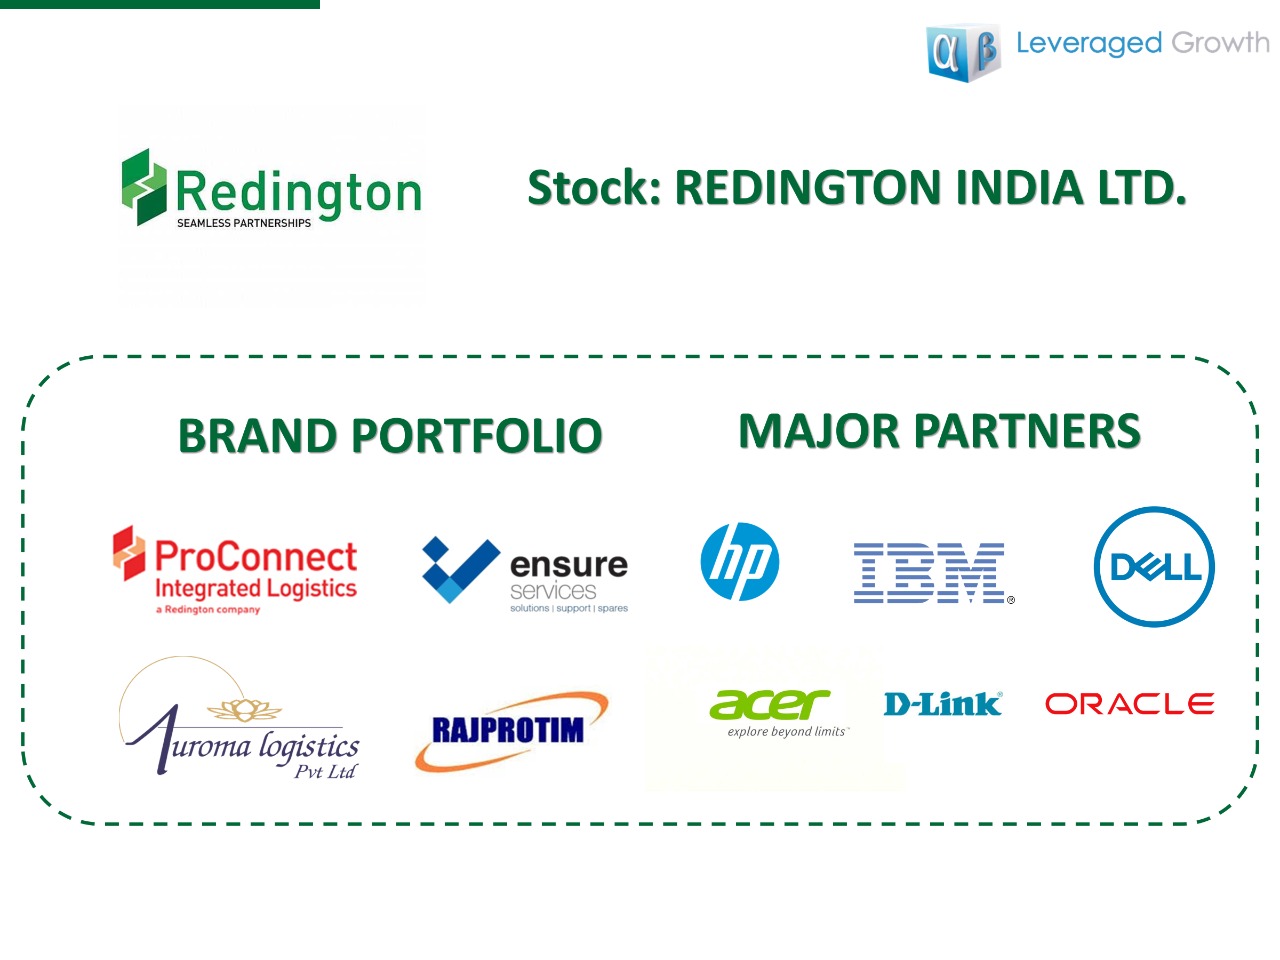 Leveraged Growth on X: R Srinivasan founded Redington (India) 30+